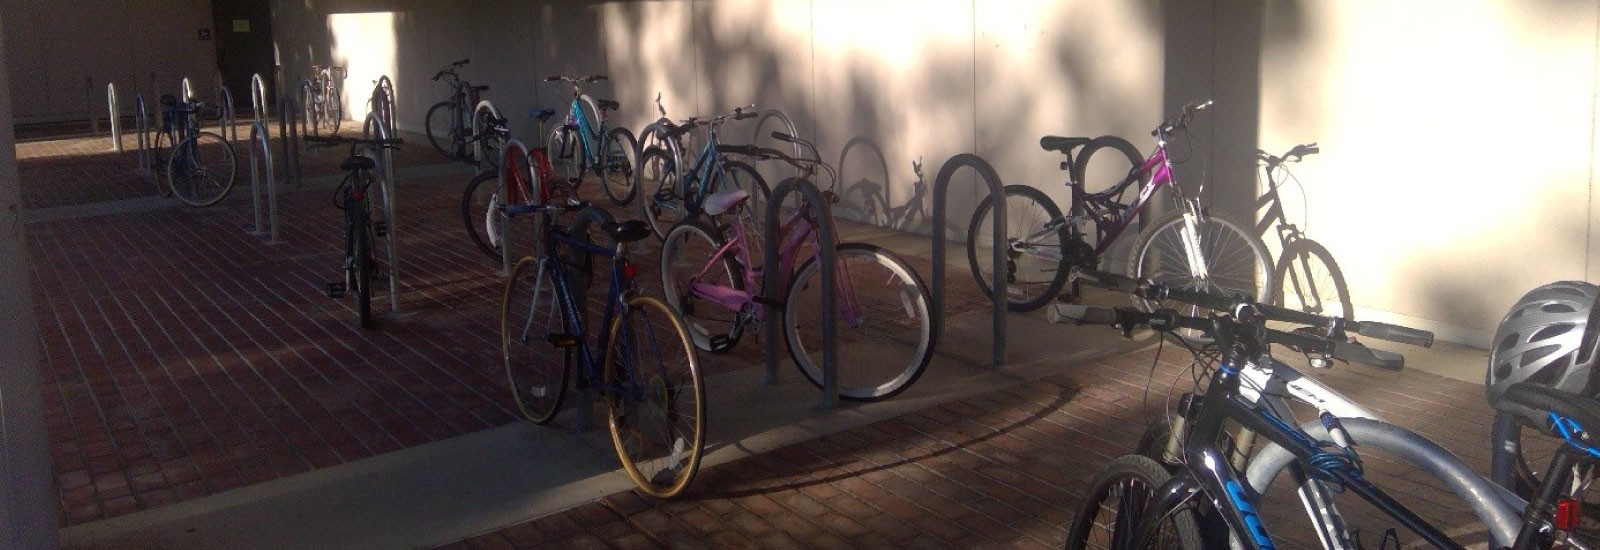 Bikes parked at the new bike racks at Kottman Hall. 